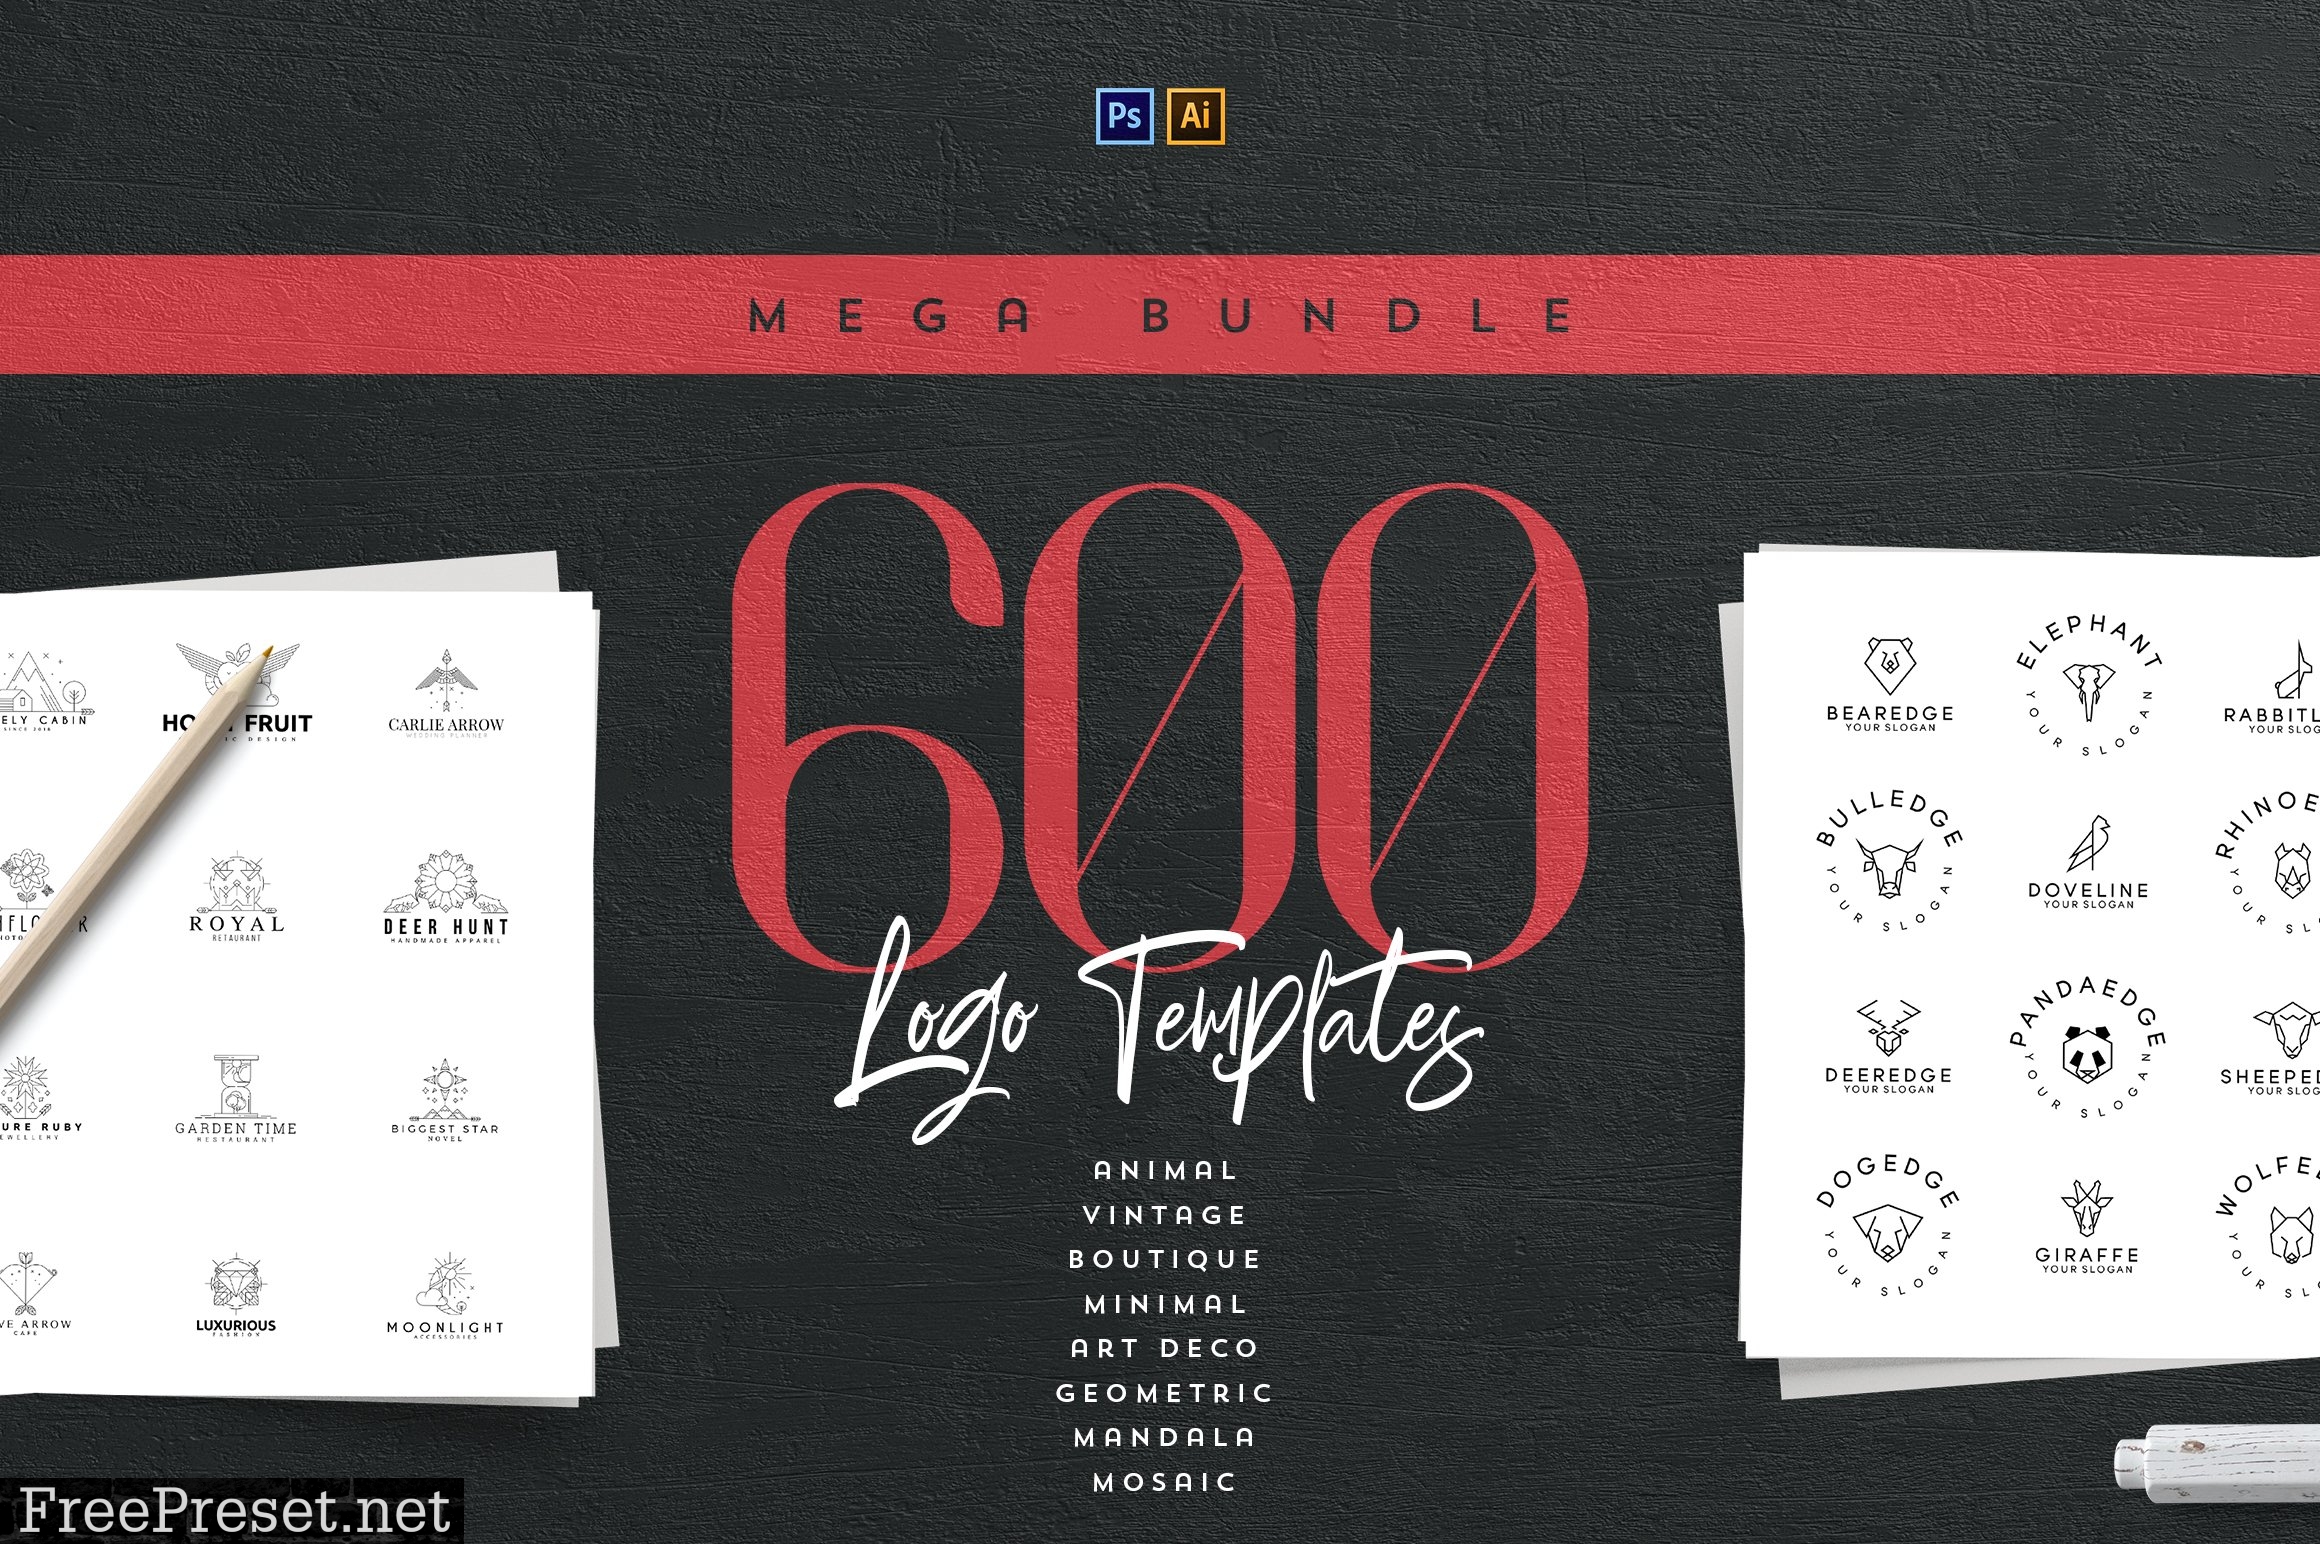 Mega Bundle – 600 Logo Templates 3239162